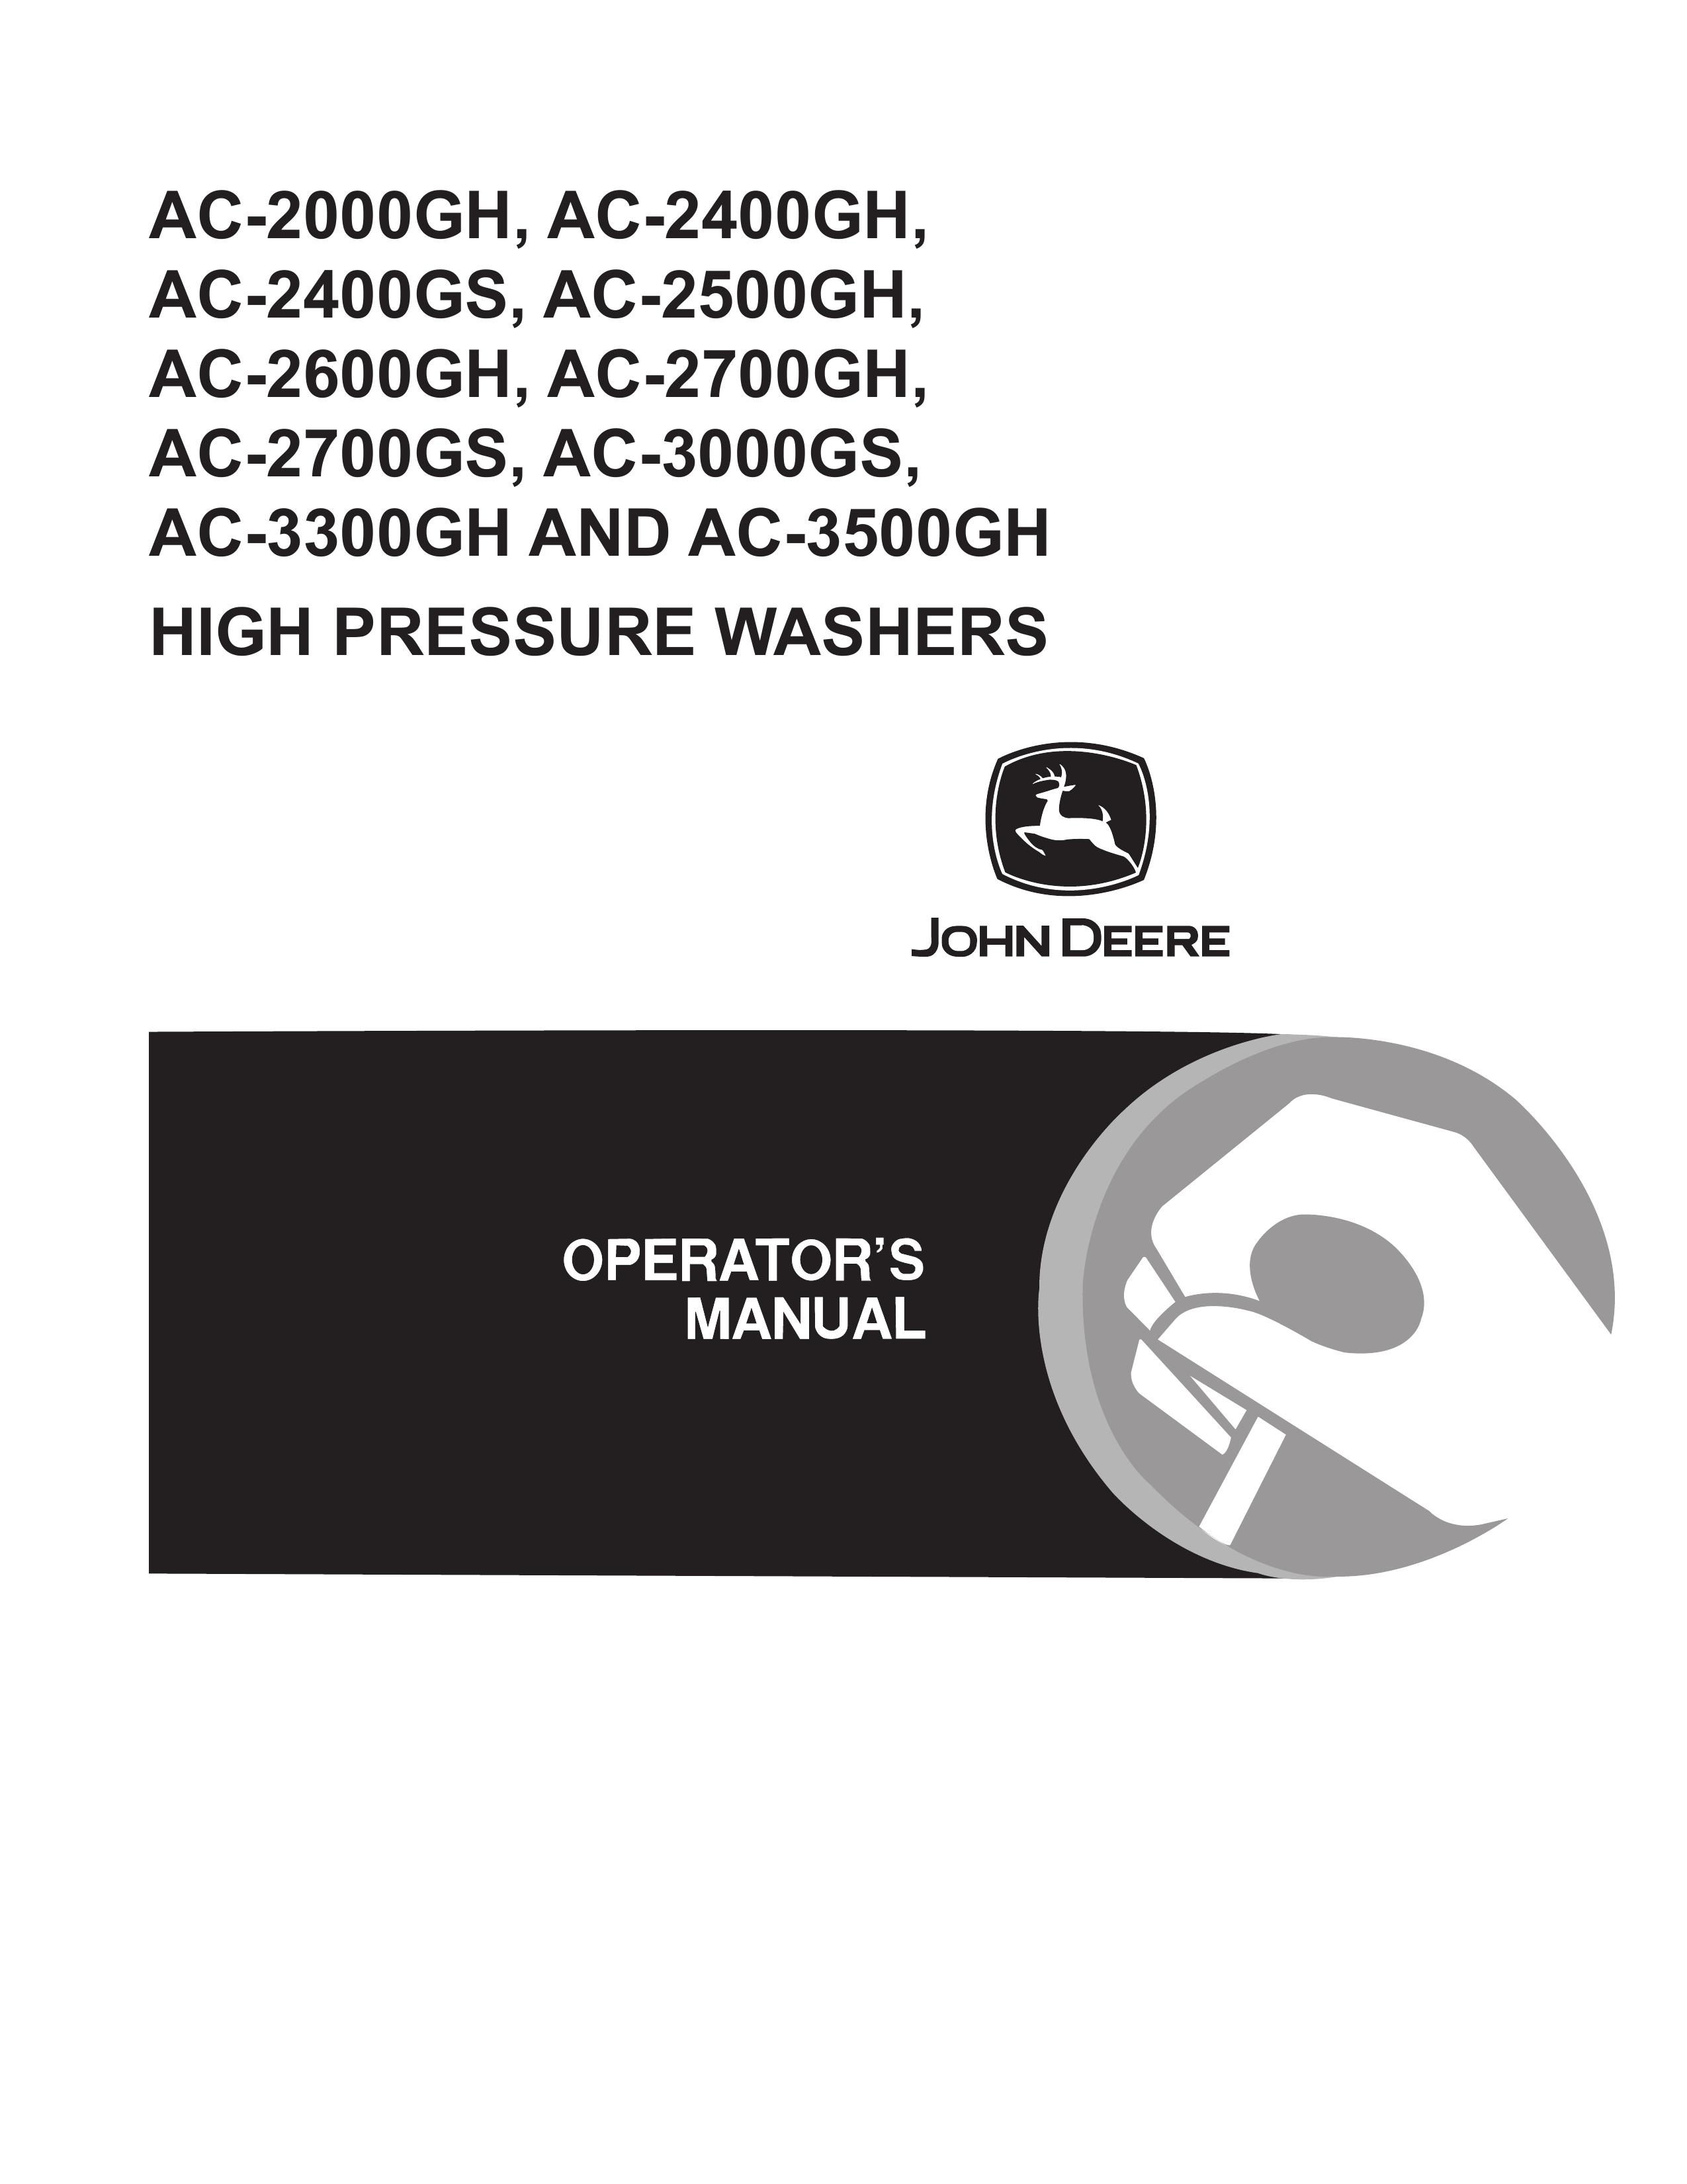 John Deere AC-2700GS Washer User Manual